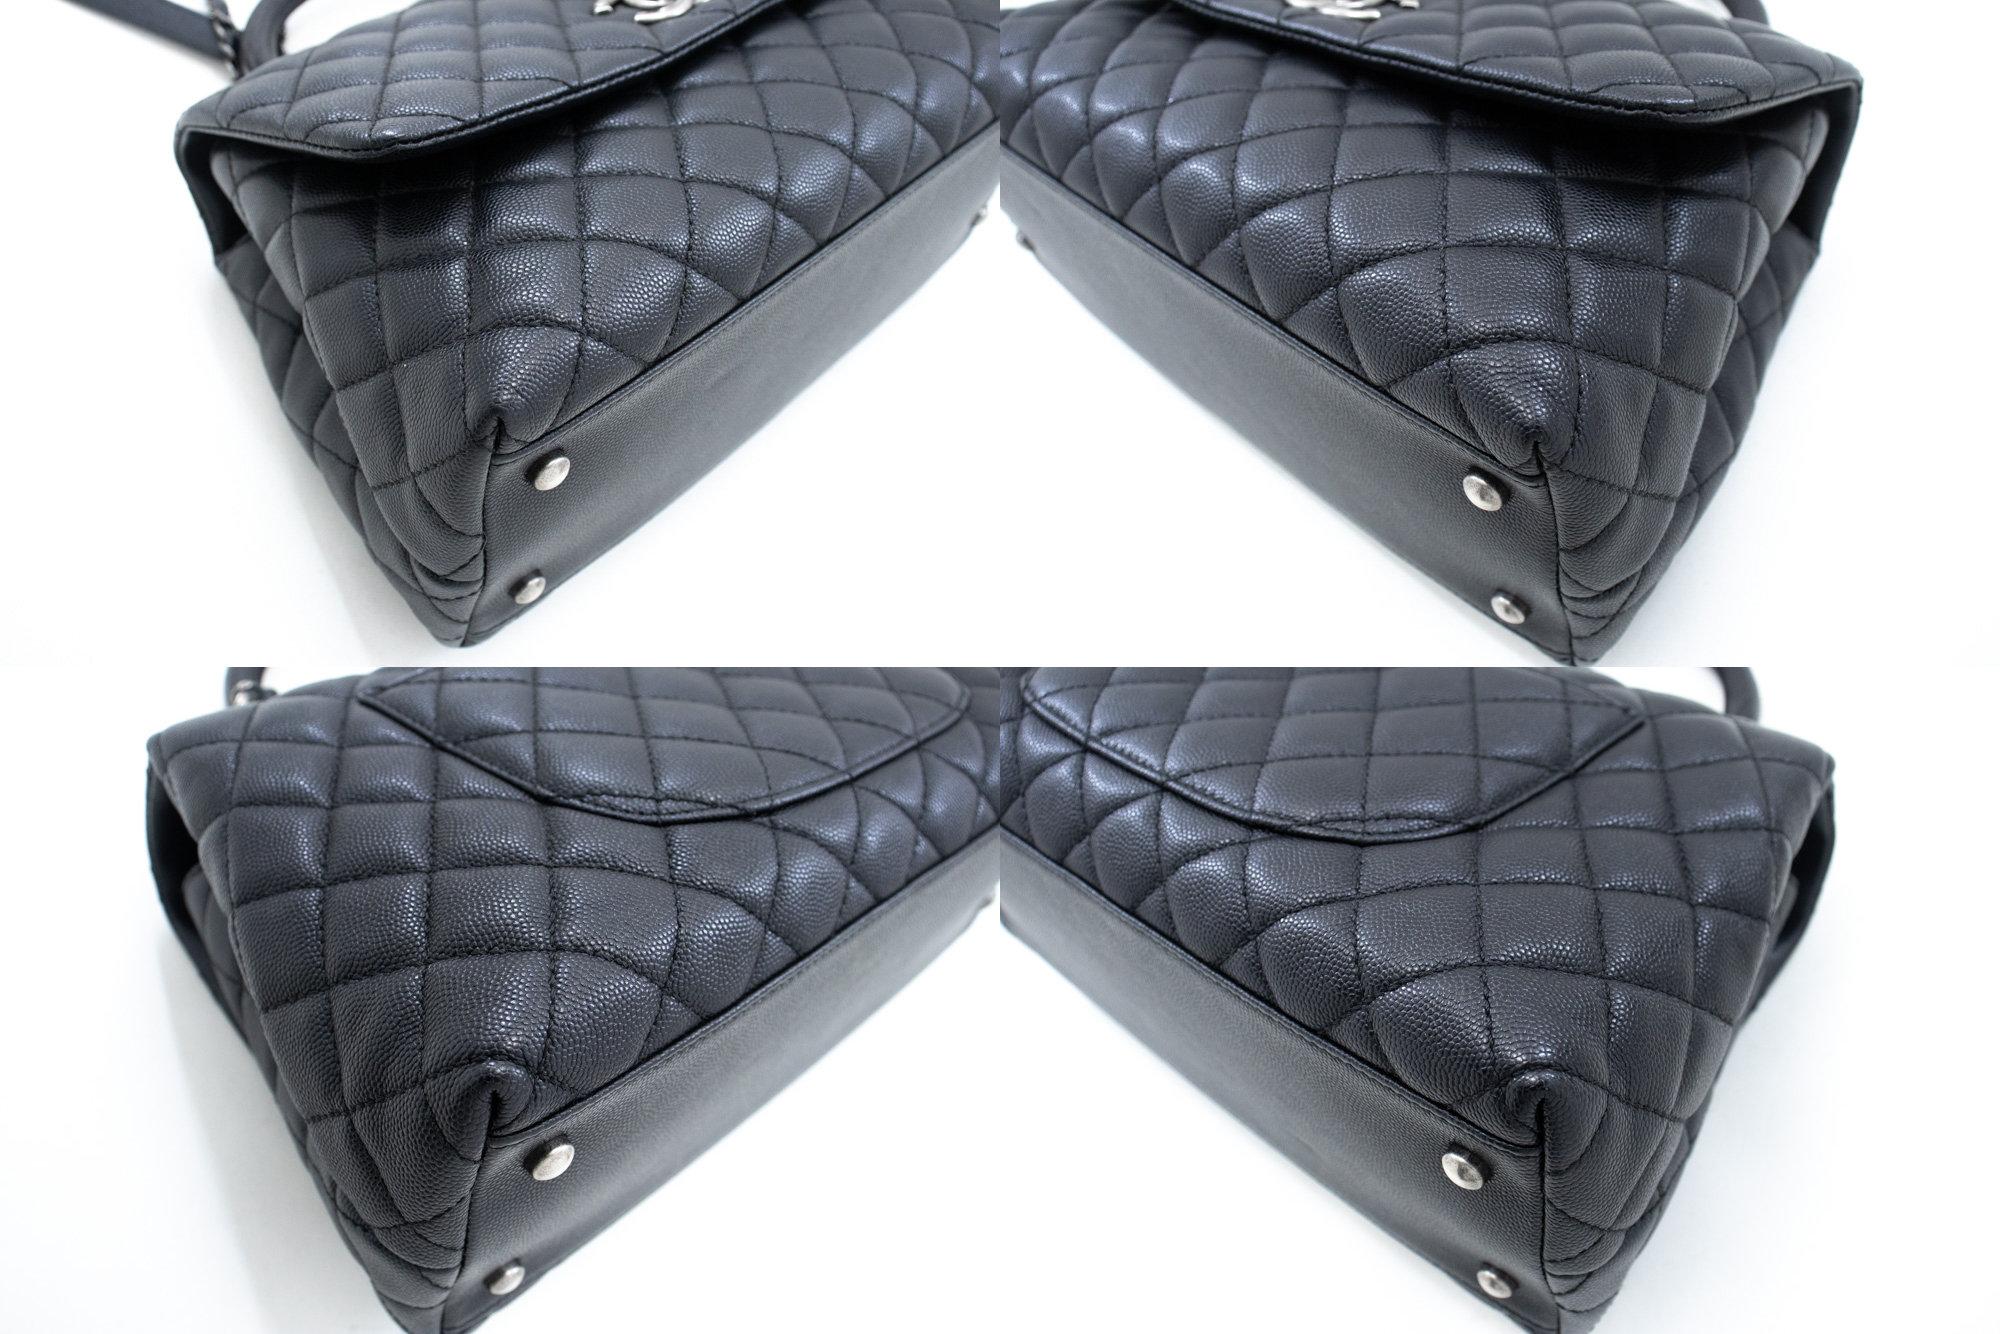 CHANEL 2 Way Top Handle Shoulder Bag Handbag Black Caviar Leather For Sale 2